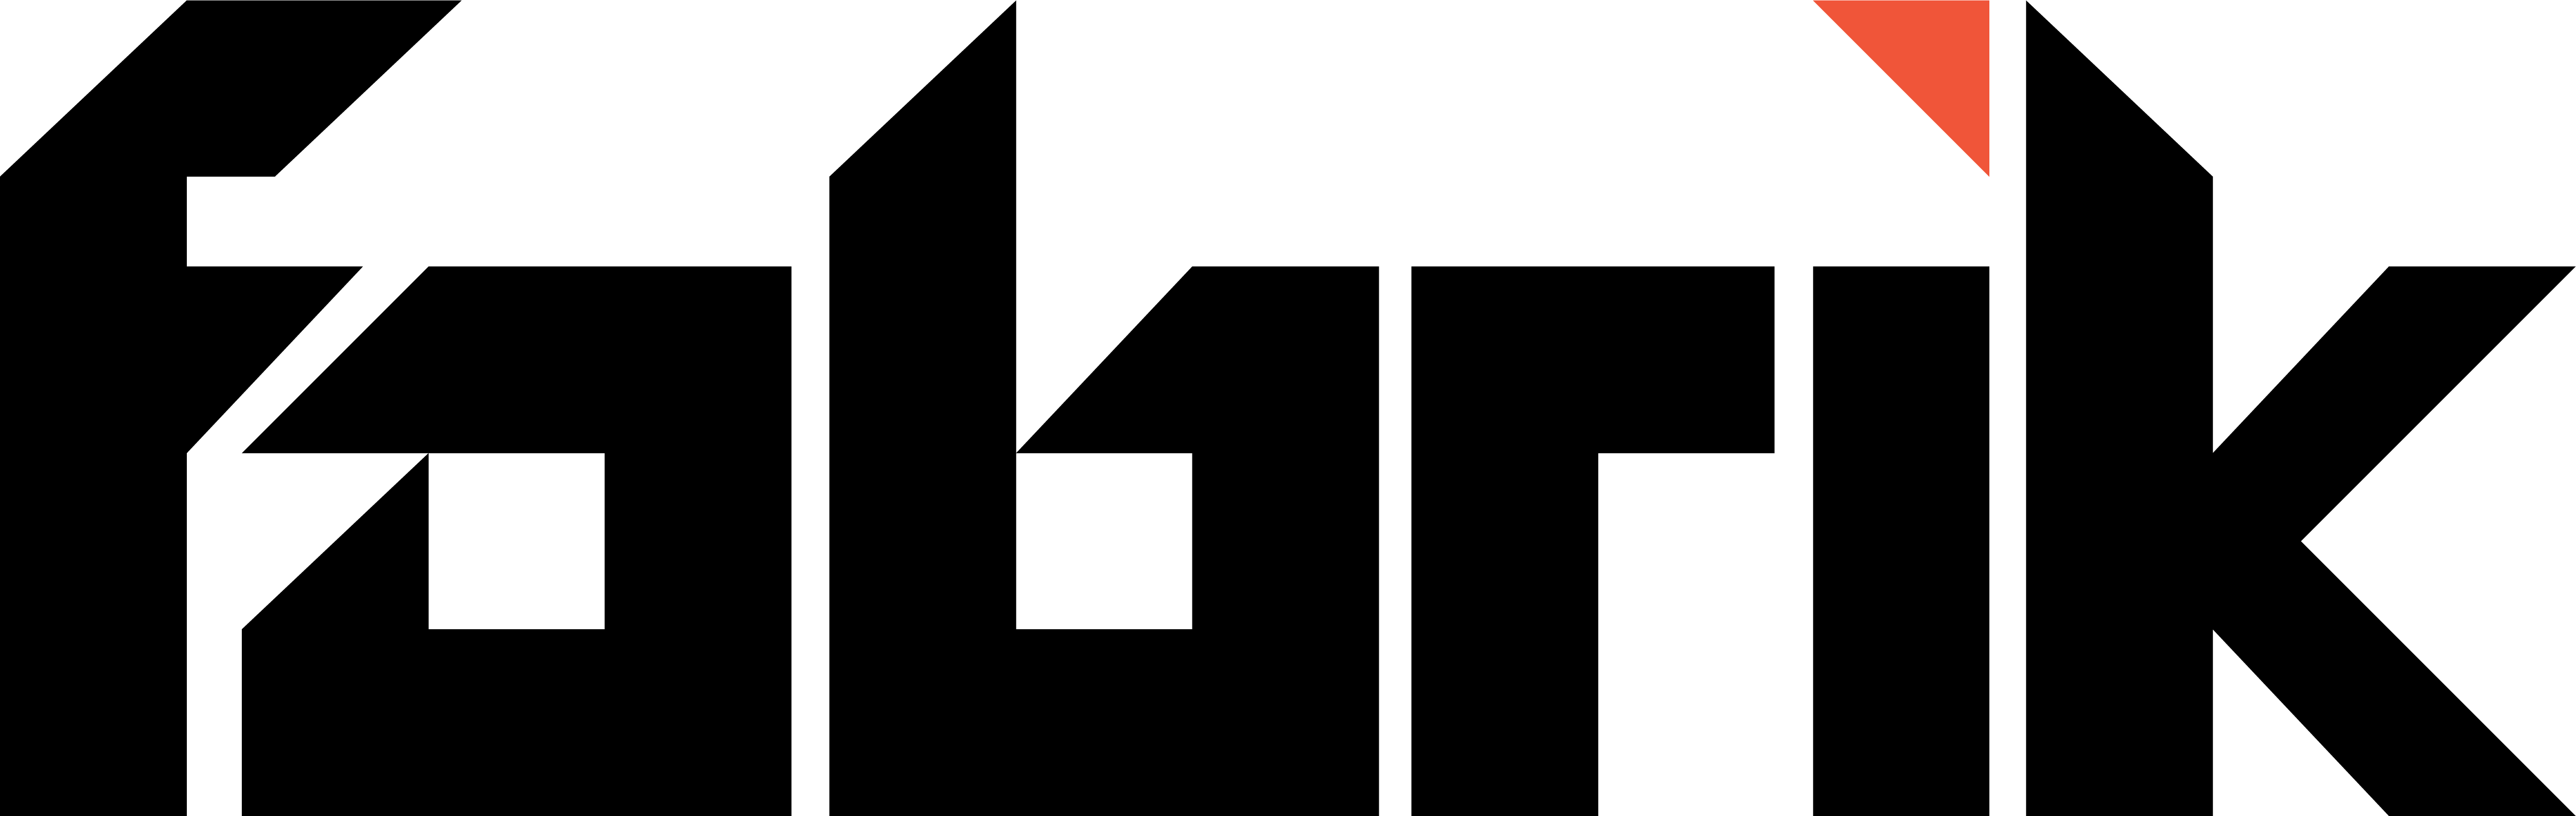 Logo for Fabrik Games (Firesprite)